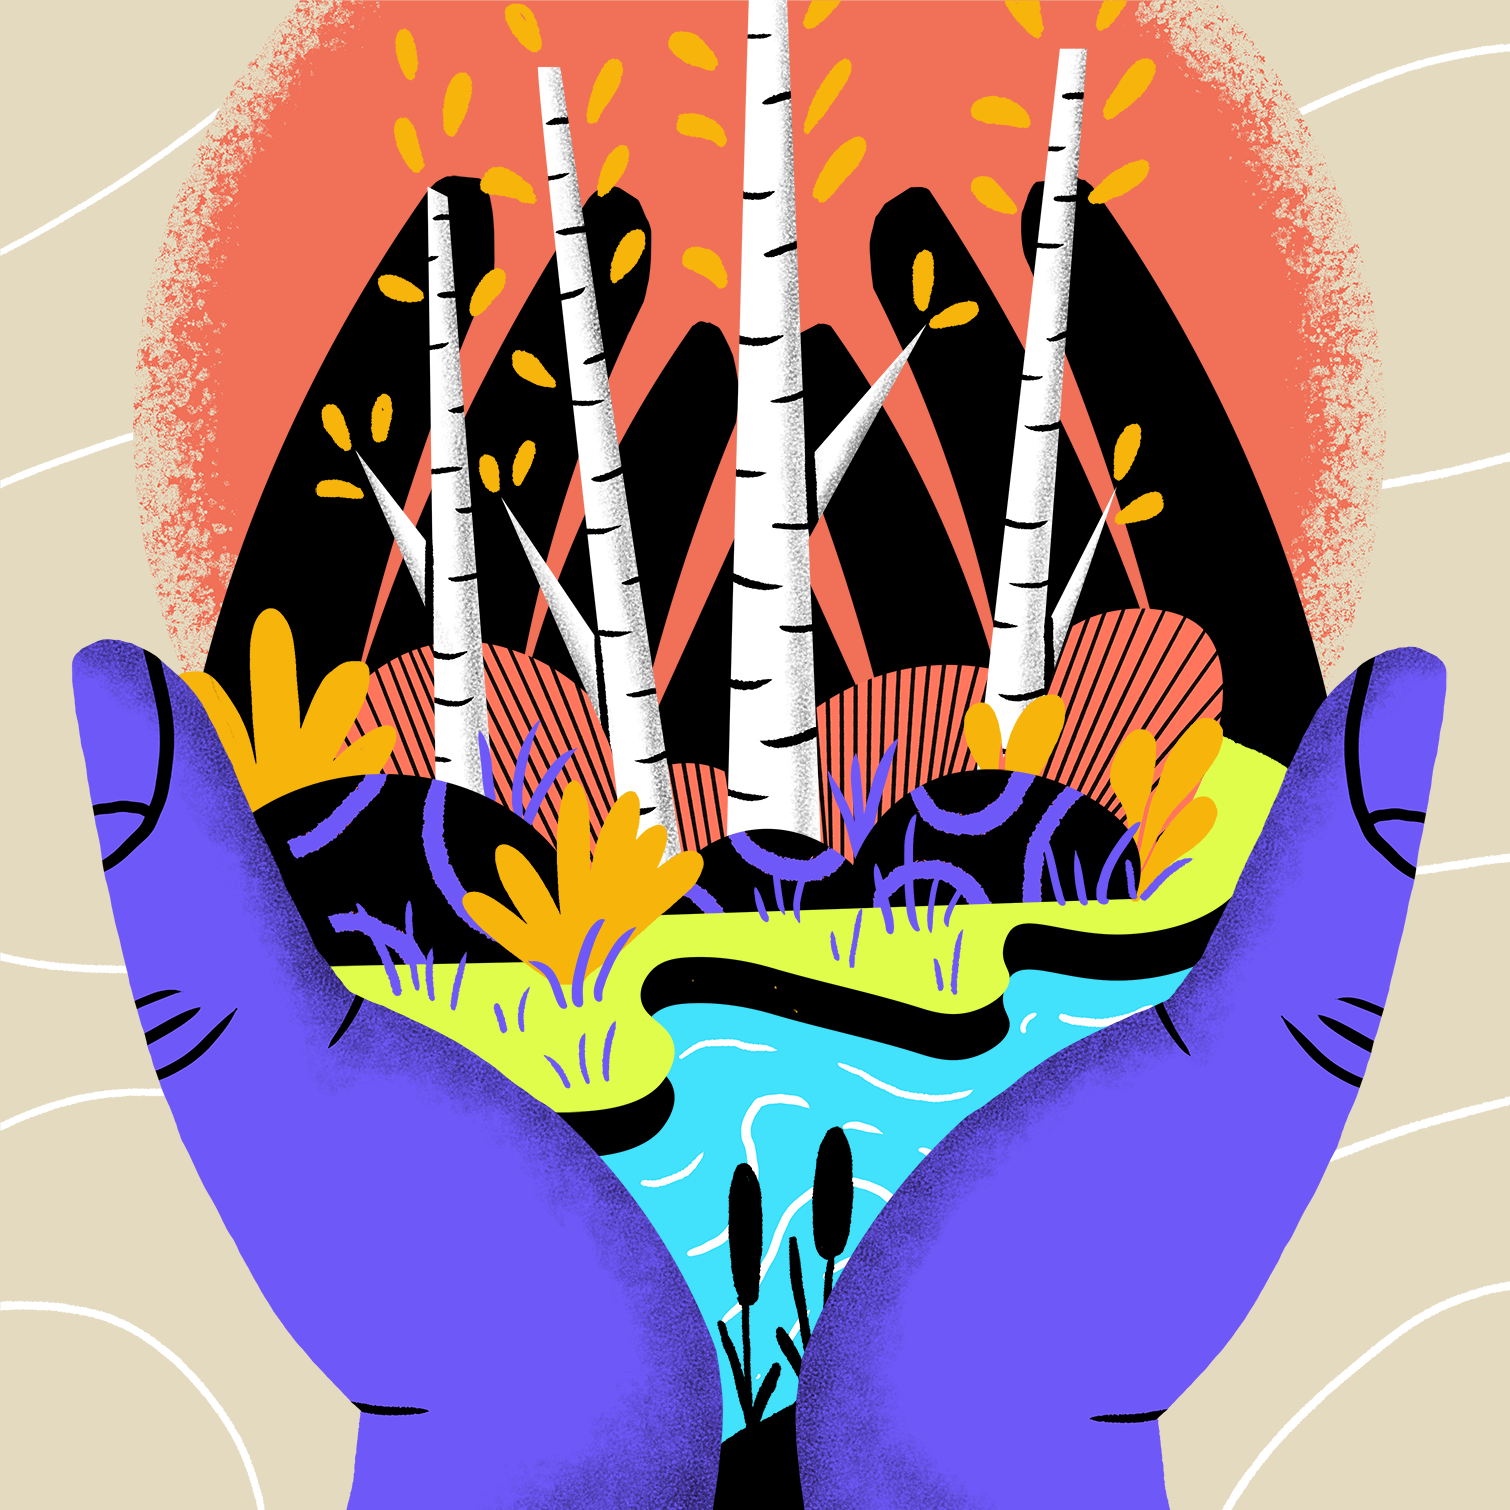 Illustrated hands holding a landscape